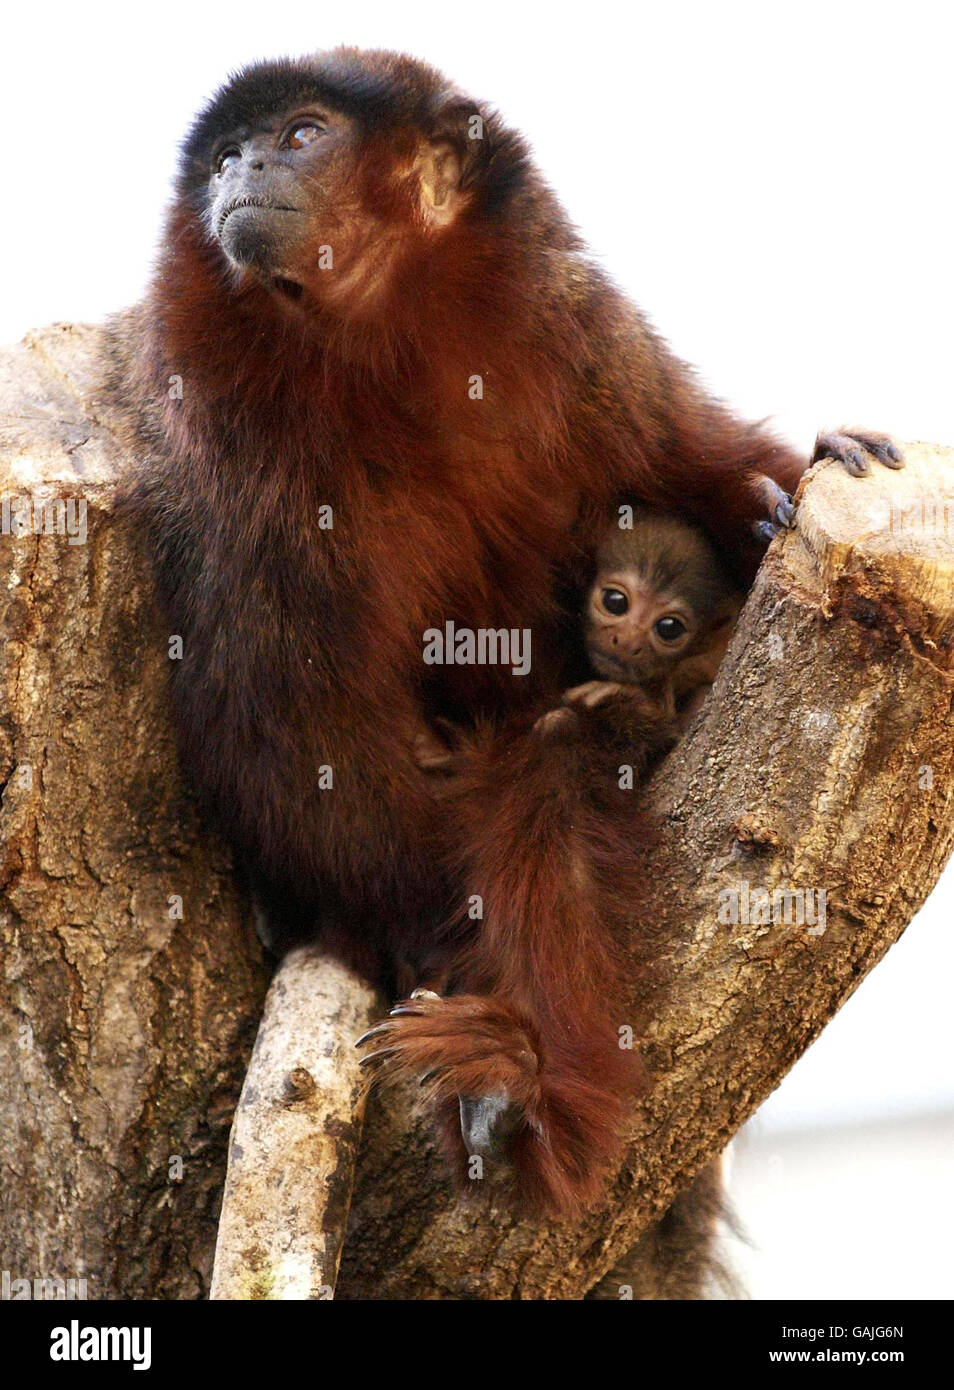 Red Titi monkey photocall Stock Photo